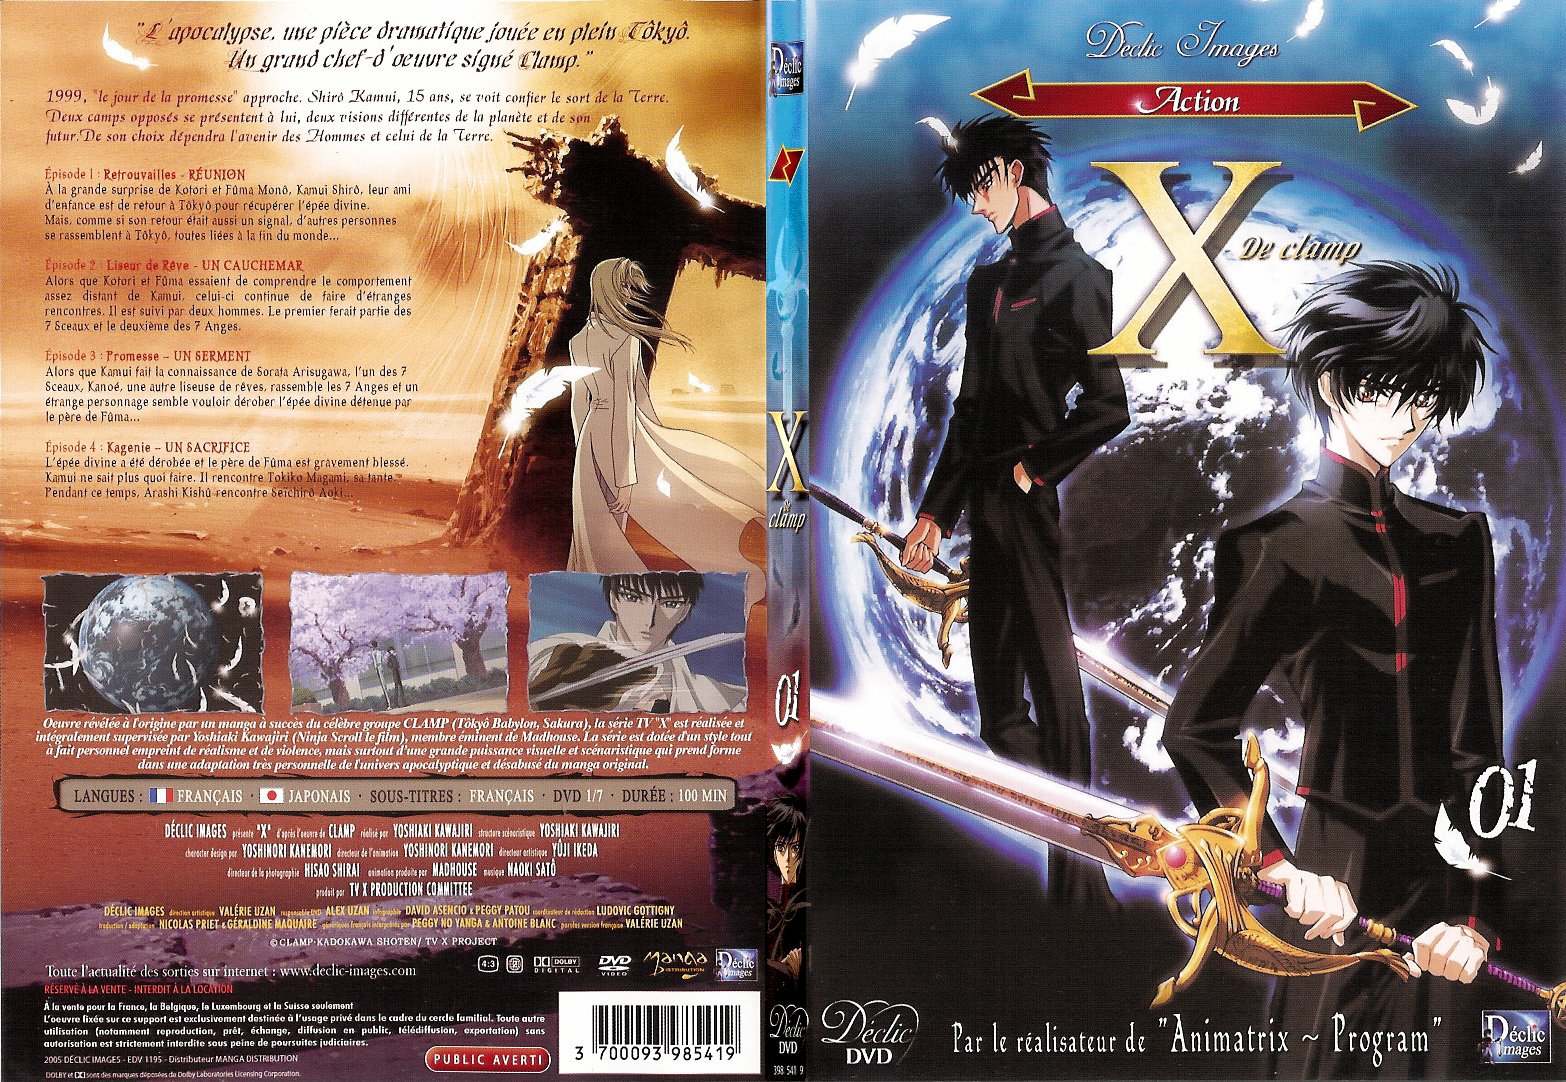 Jaquette DVD X de clamp vol 1 - SLIM